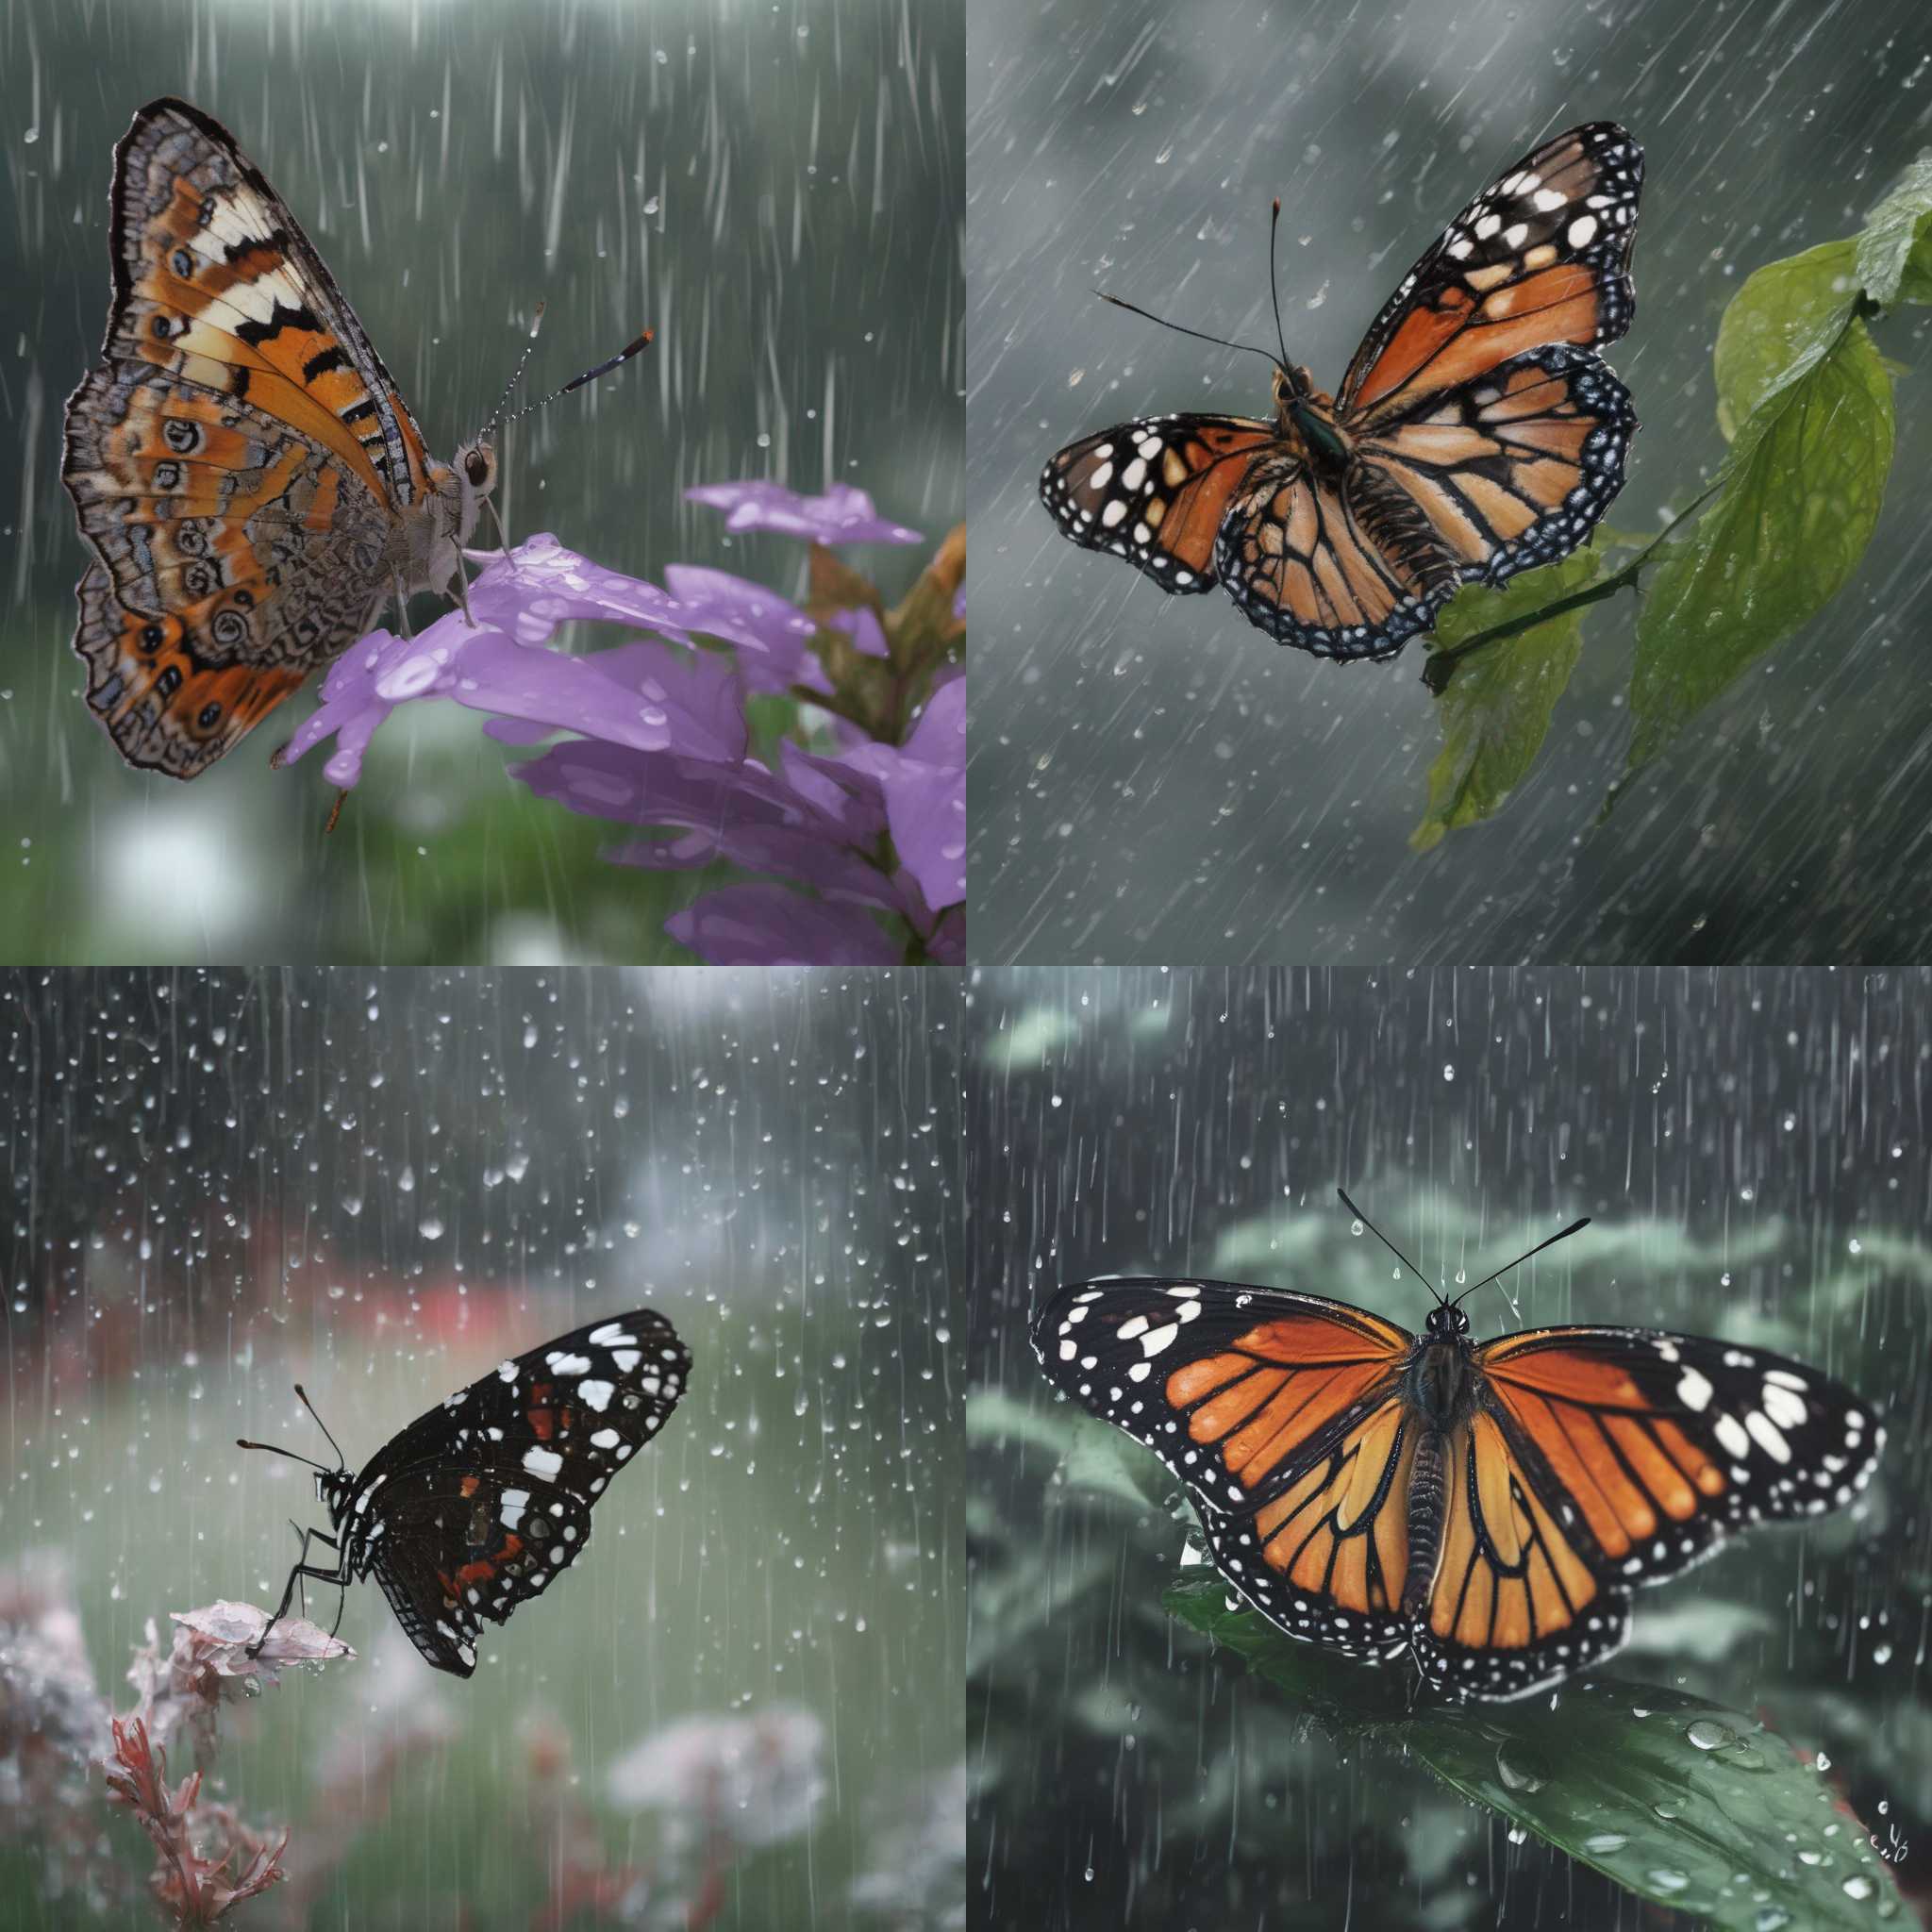 A butterfly on a rainy day